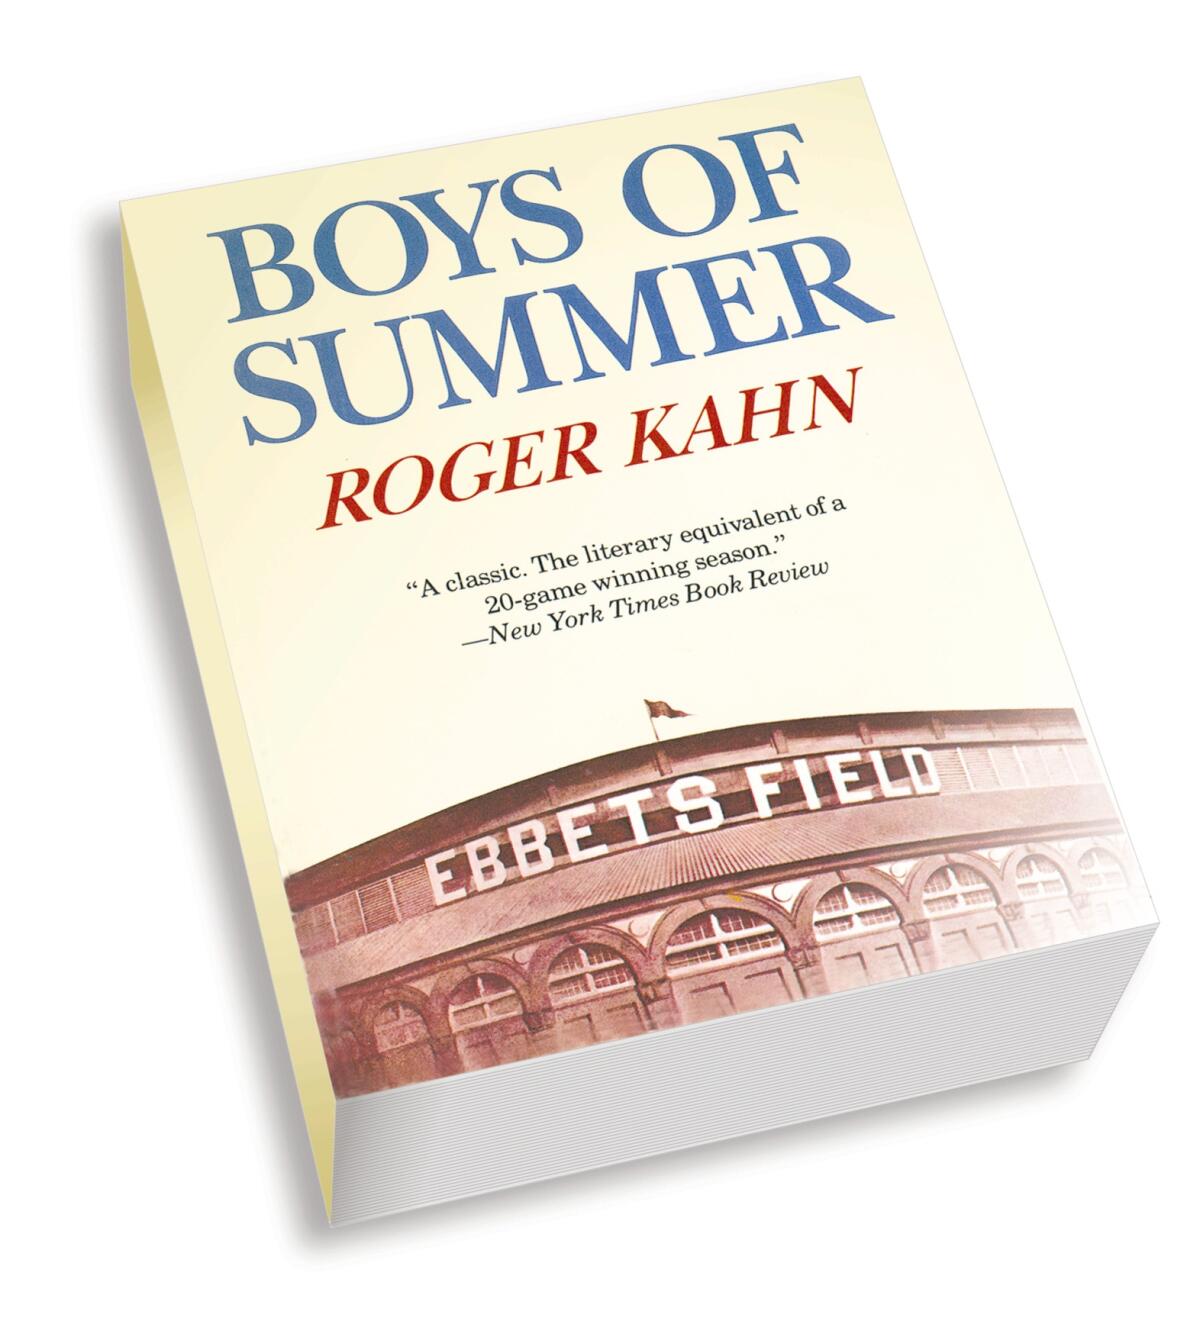 The "Boys of Summer" by Roger Kahn